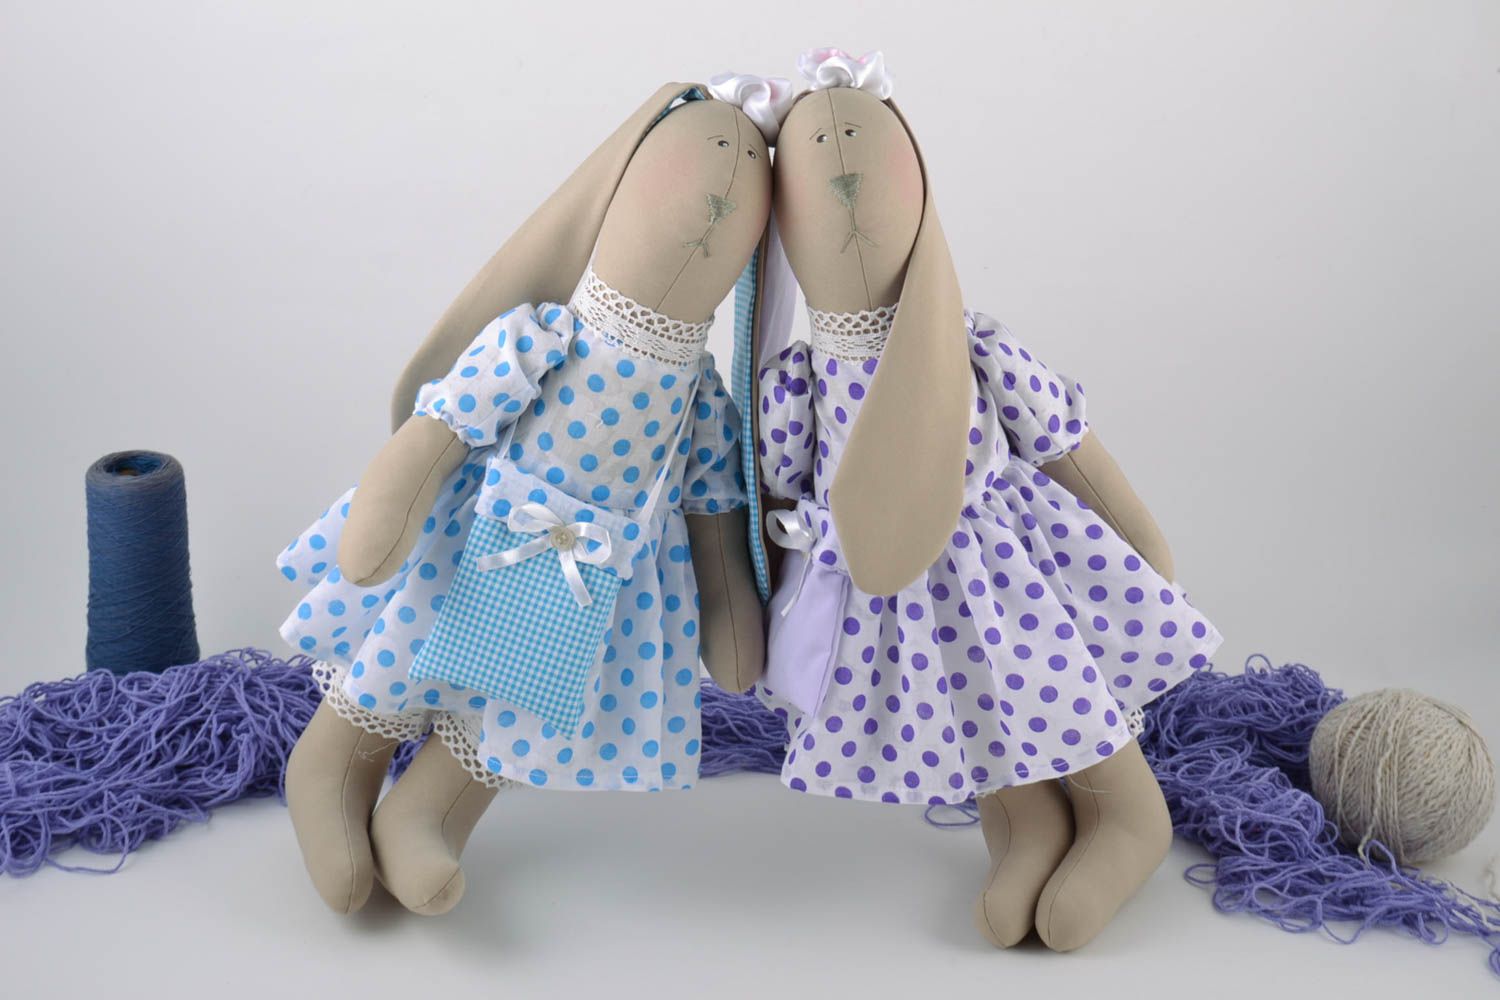 Set of 2 handmade natural fabric soft toys rabbits girls in polka dot dresses photo 1